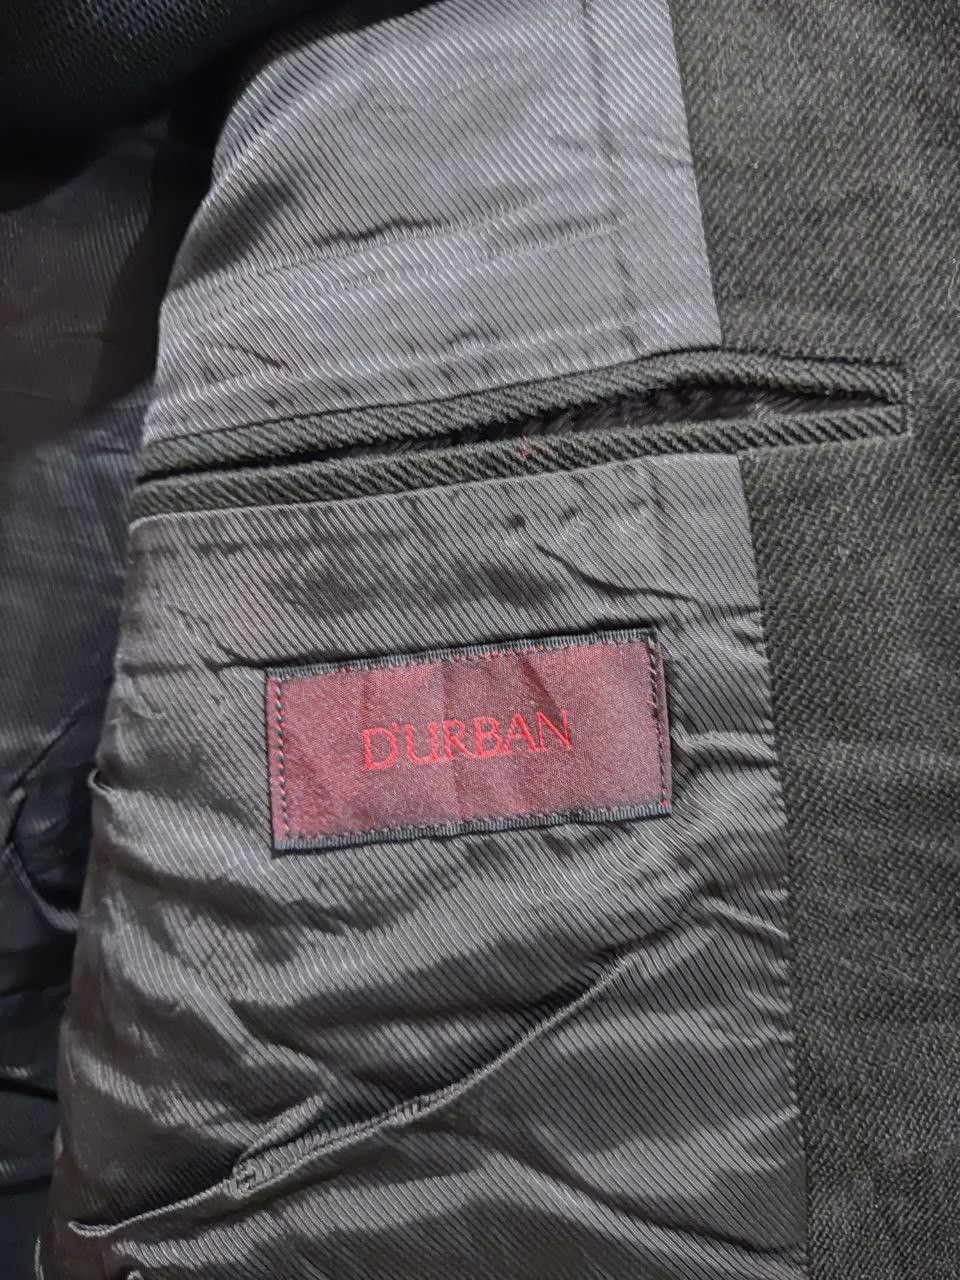 D'Urban Taylor Casual Japanese Designer Blazer Suit Jacket - 7